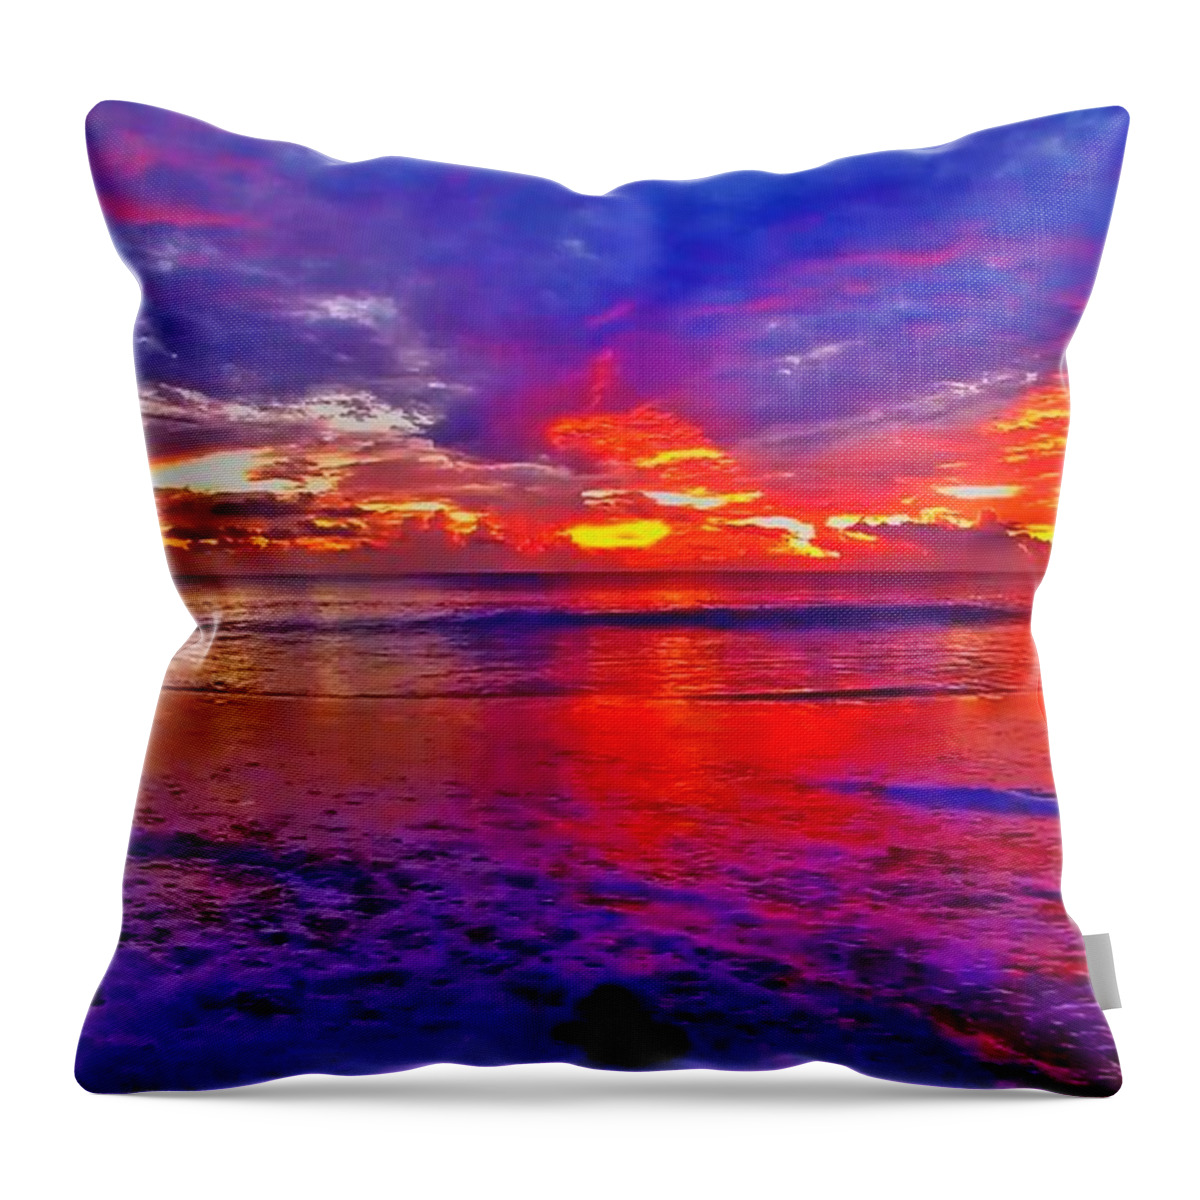 Sunrise Throw Pillow featuring the photograph Sunrise Beach 1081 by Rip Read